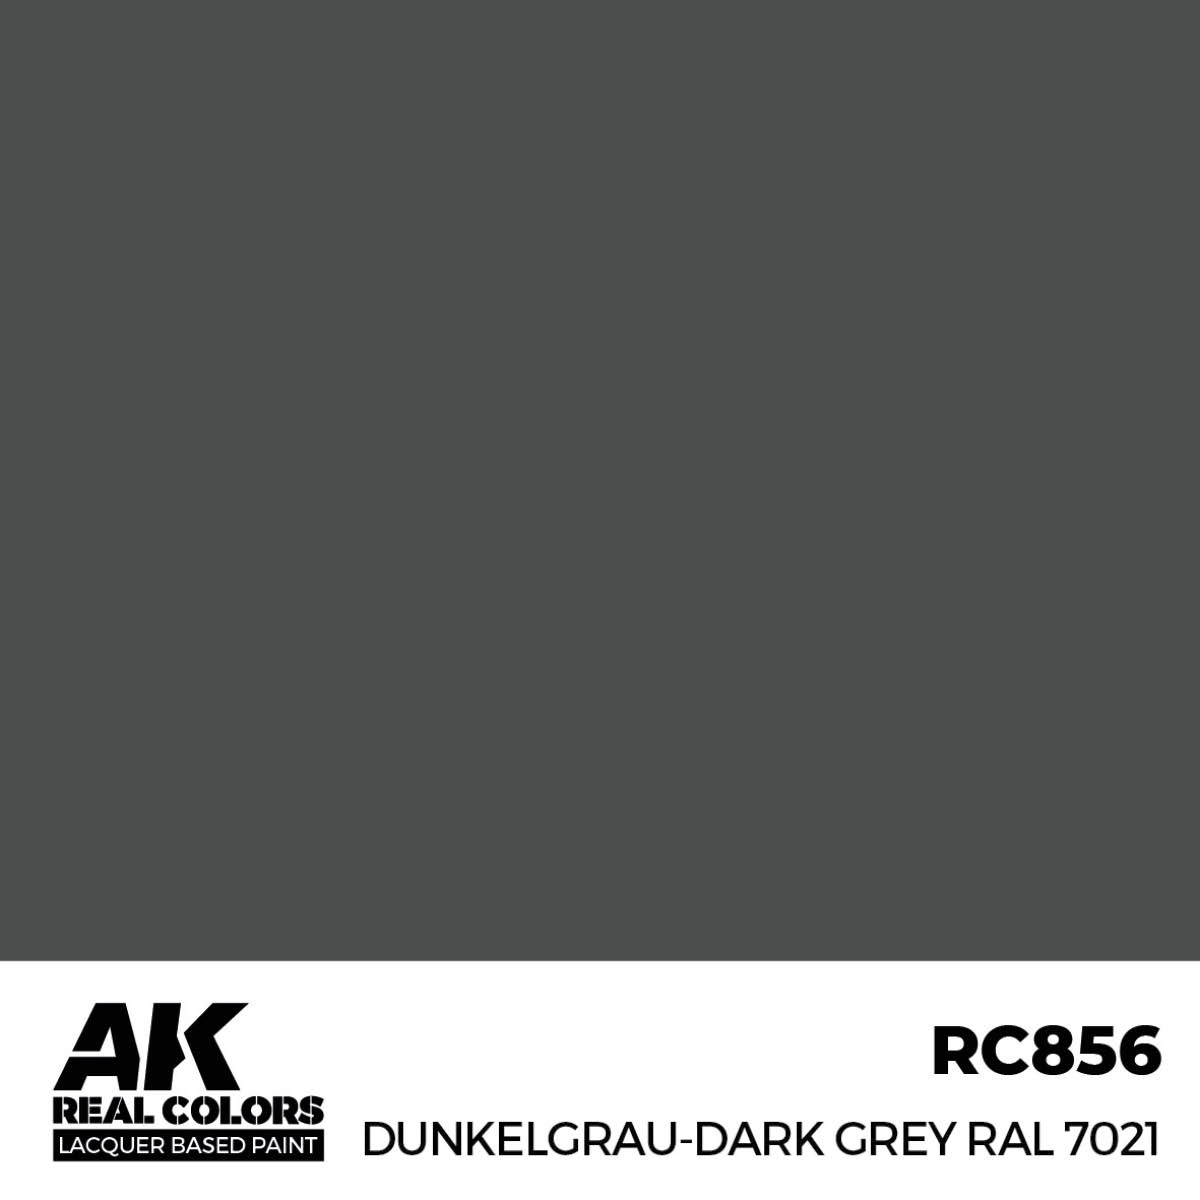 Dunkelgrau-Dark Grey RAL 7021